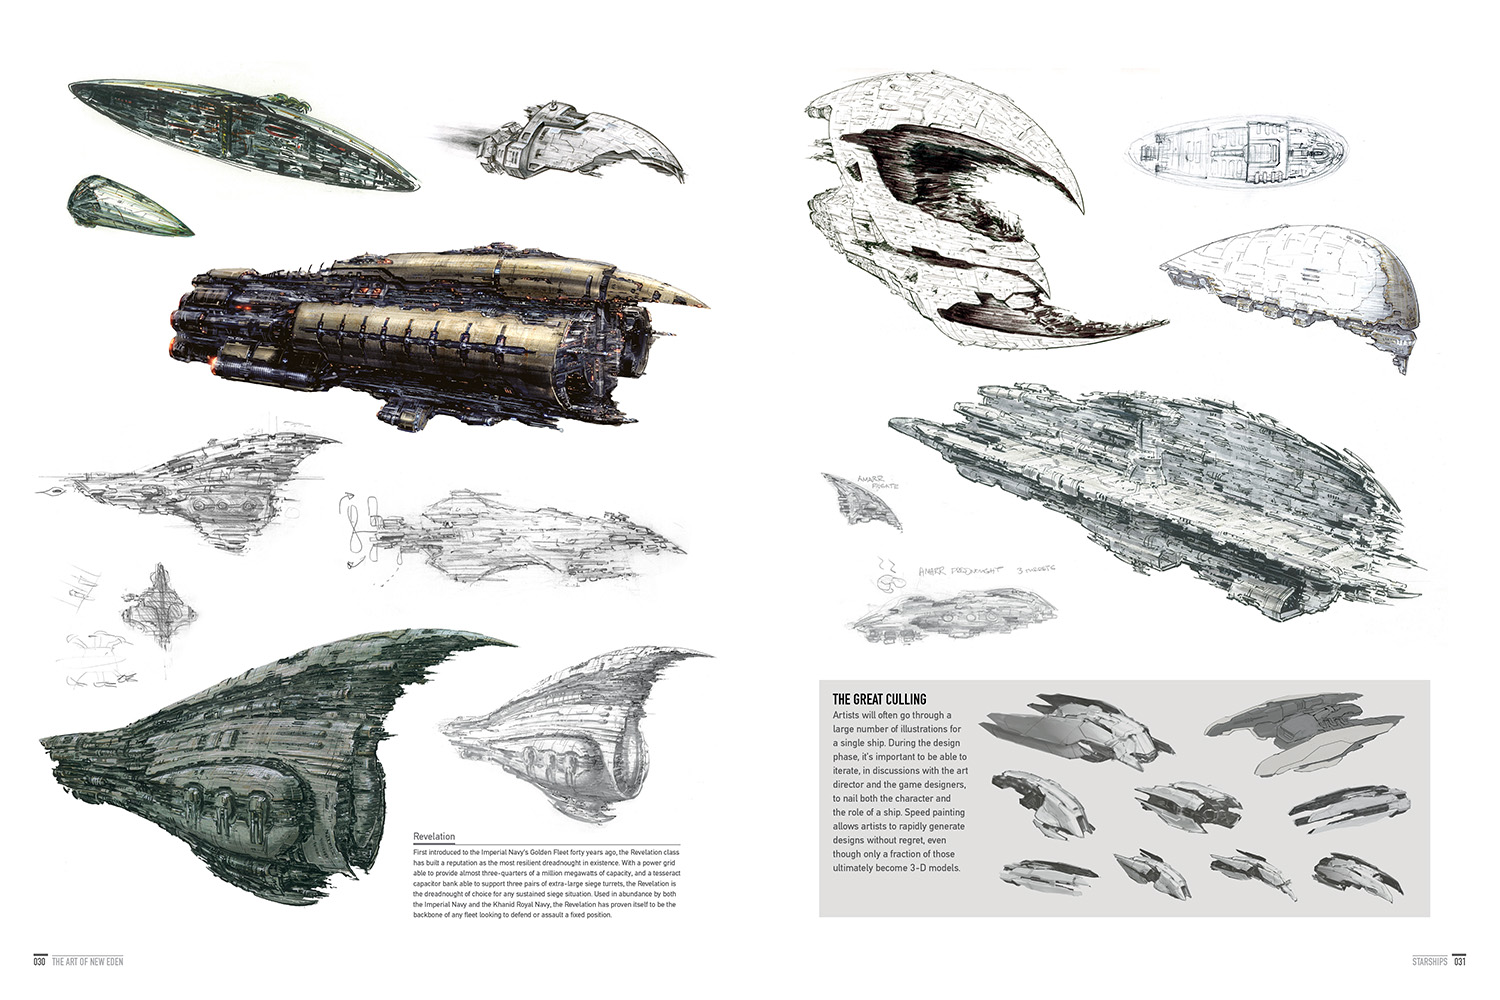 Spaceship Concept Art Eve Online